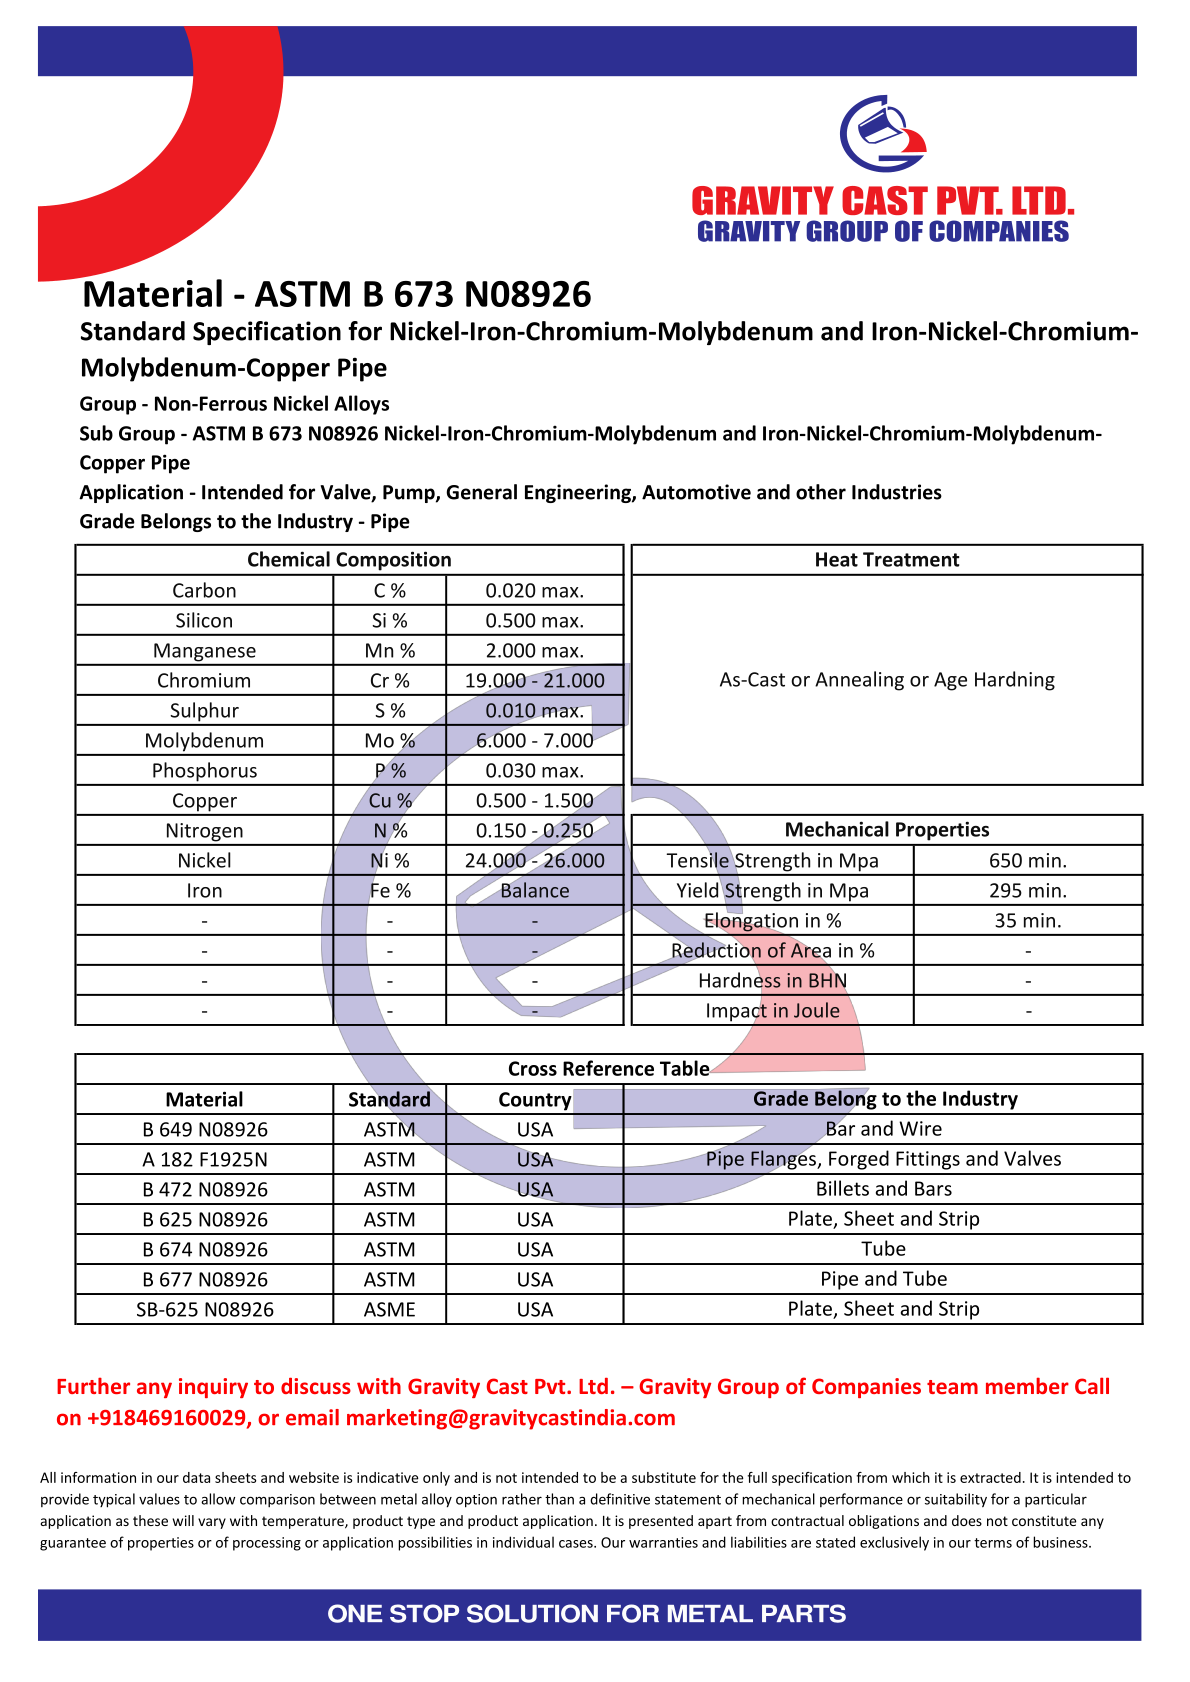 ASTM B 673 N08926.pdf